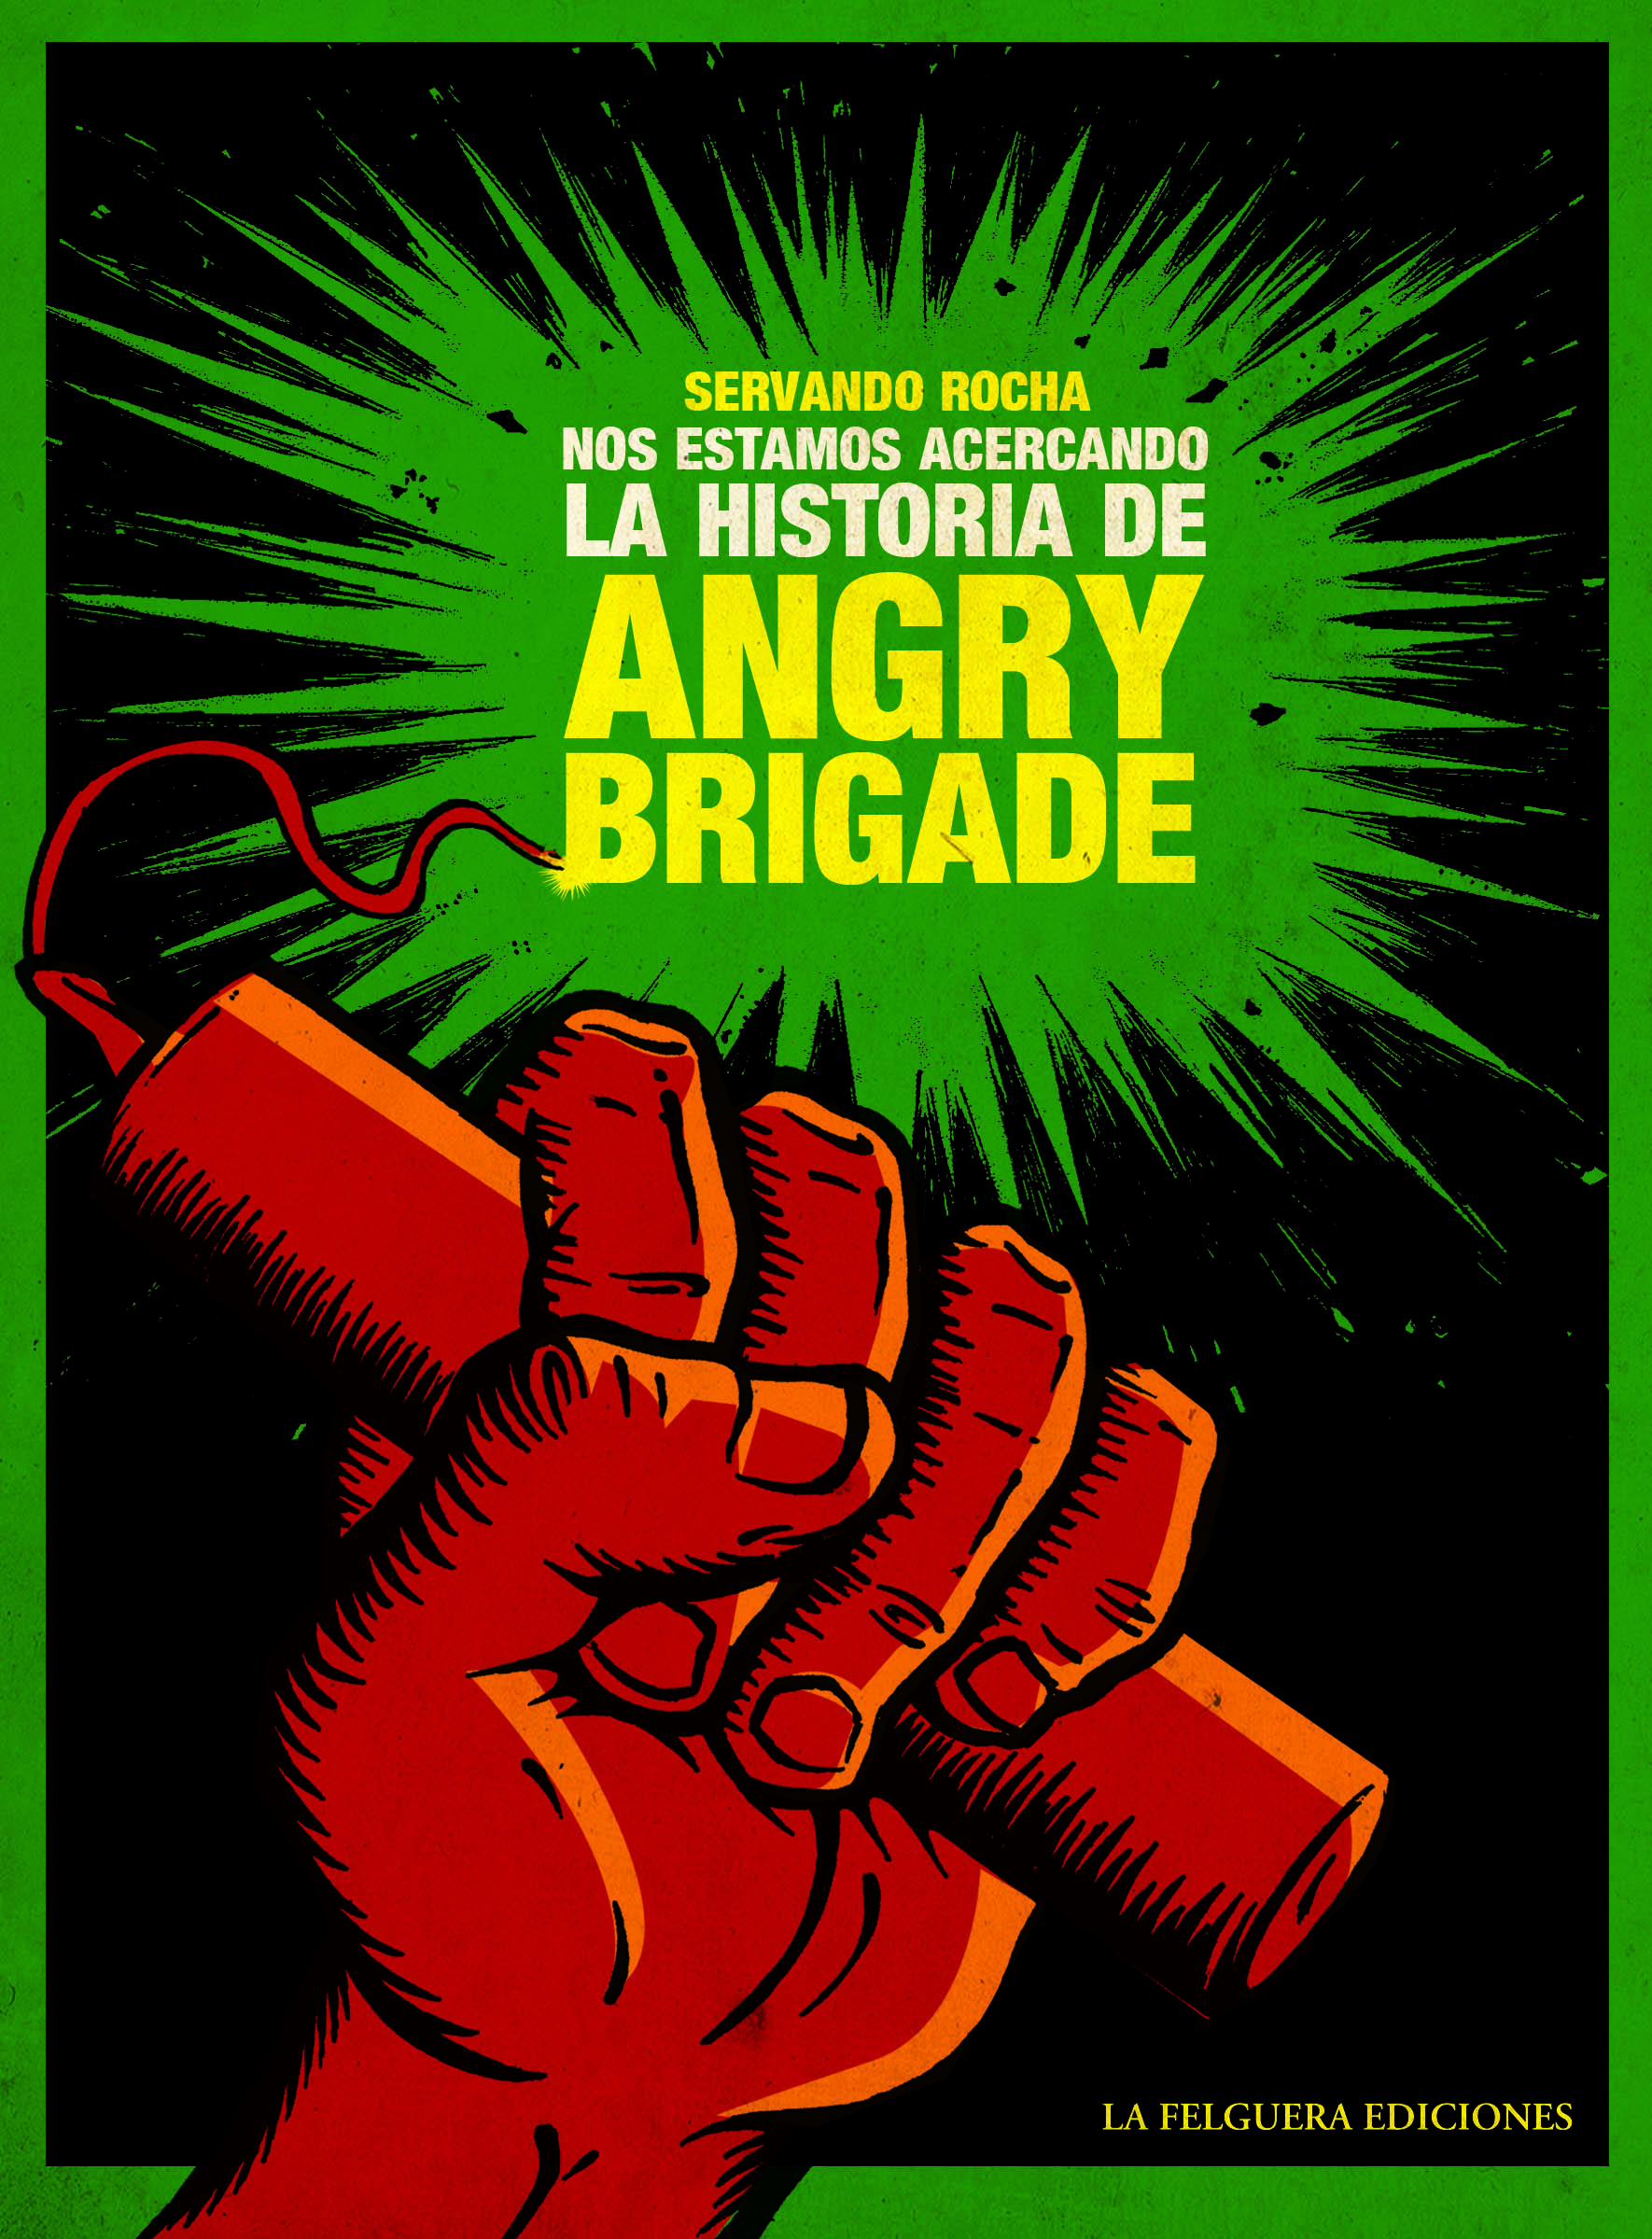 Portada-para-medios-Angry-Brigade-book2.jpg